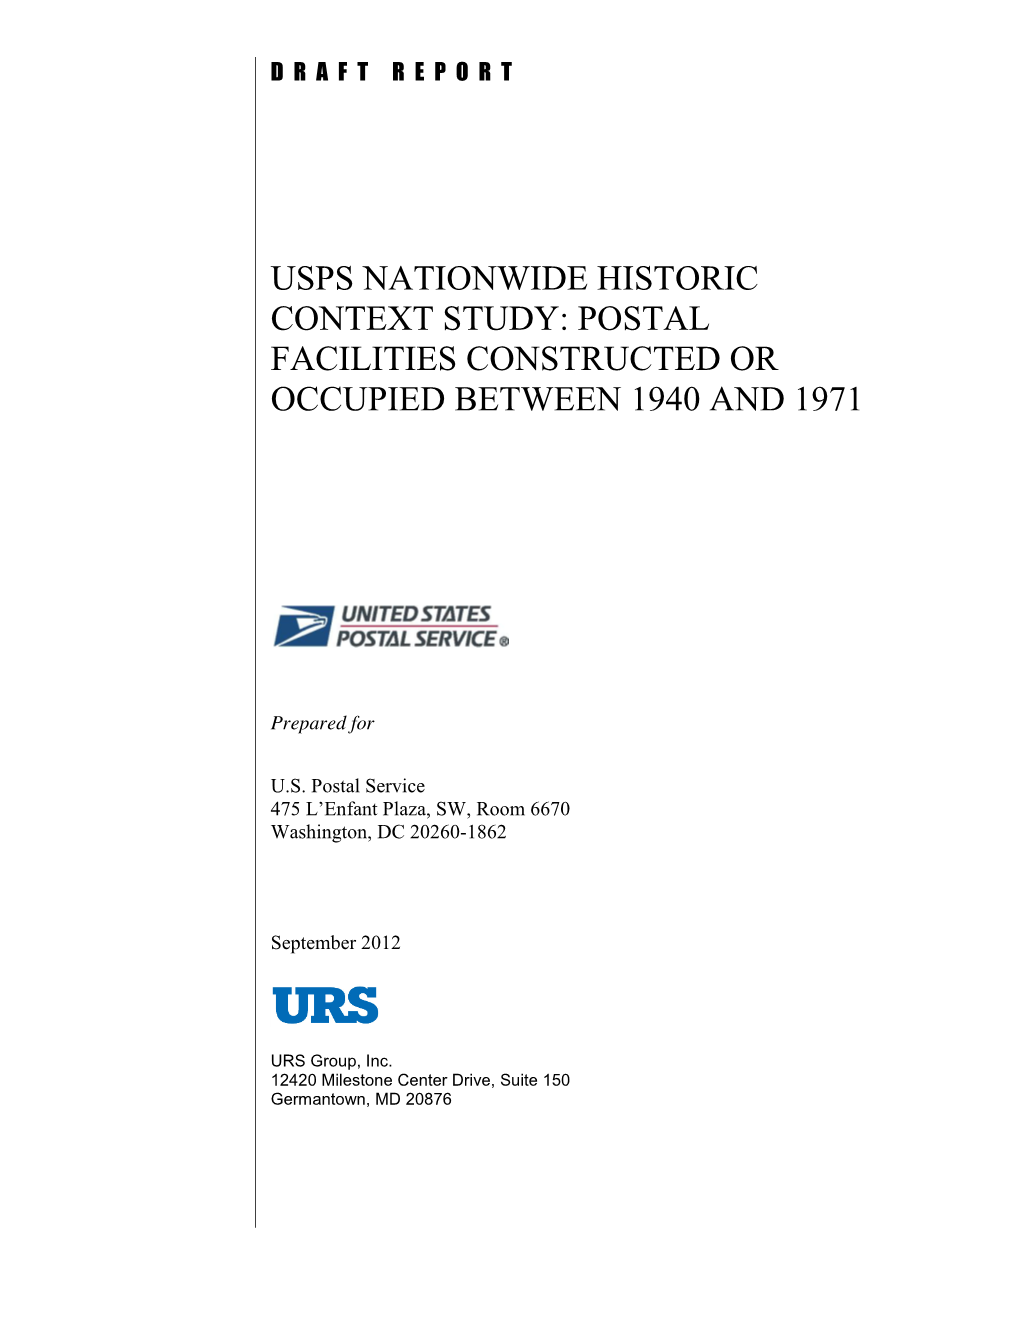 U.S.P.S. Nationwide Historic Context Study